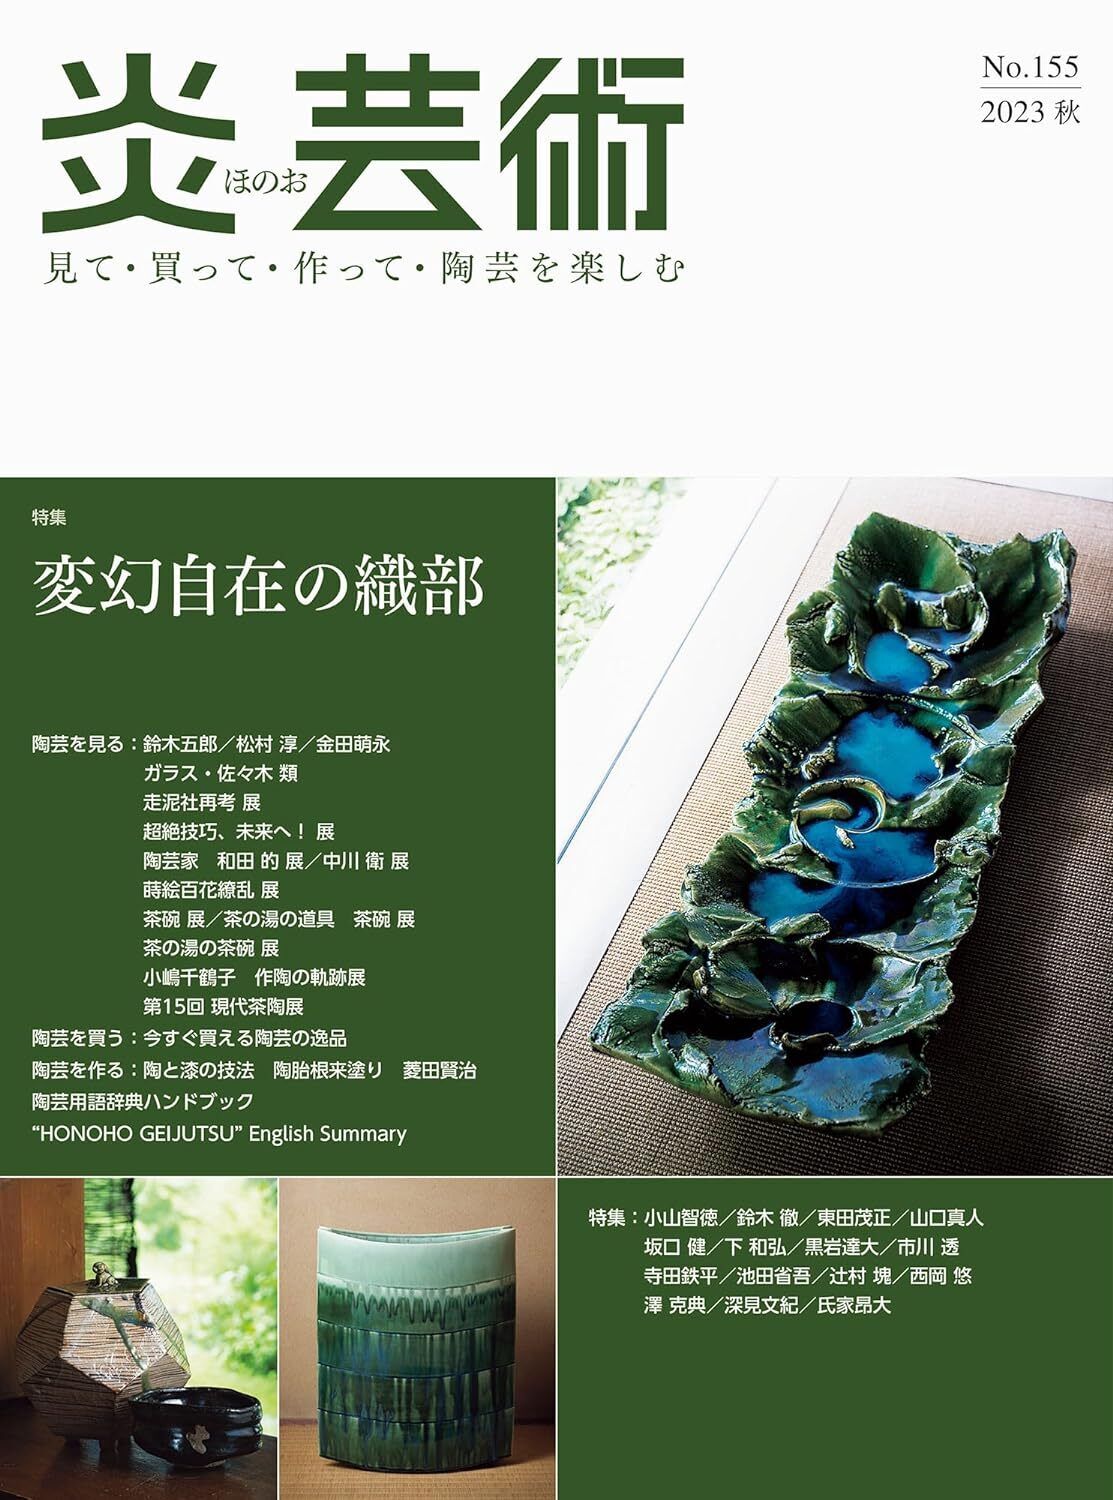 HONOHO GEIJUTSU Pottery Ceramic Art Japanese Mag Vol.155 Oribe Ware New